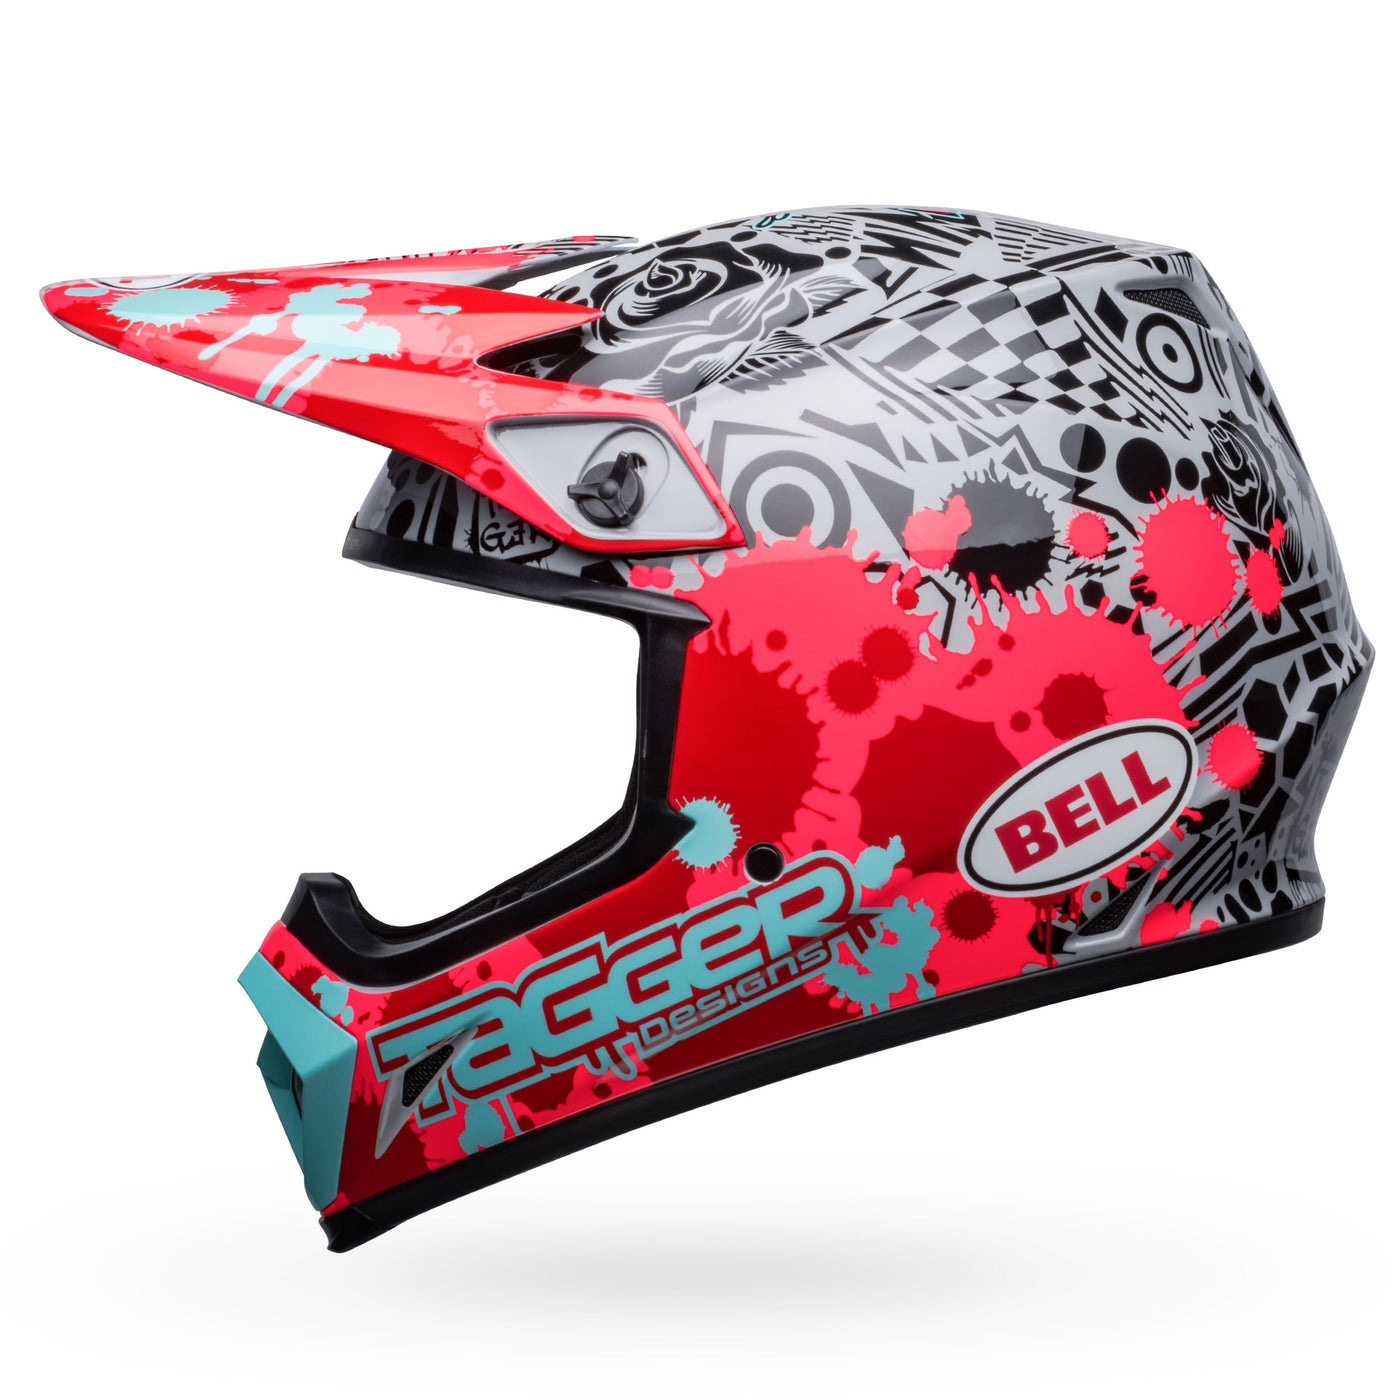 bell mx 9 mips dirt motorcycle helmet tagger splatter gloss bright red gray left